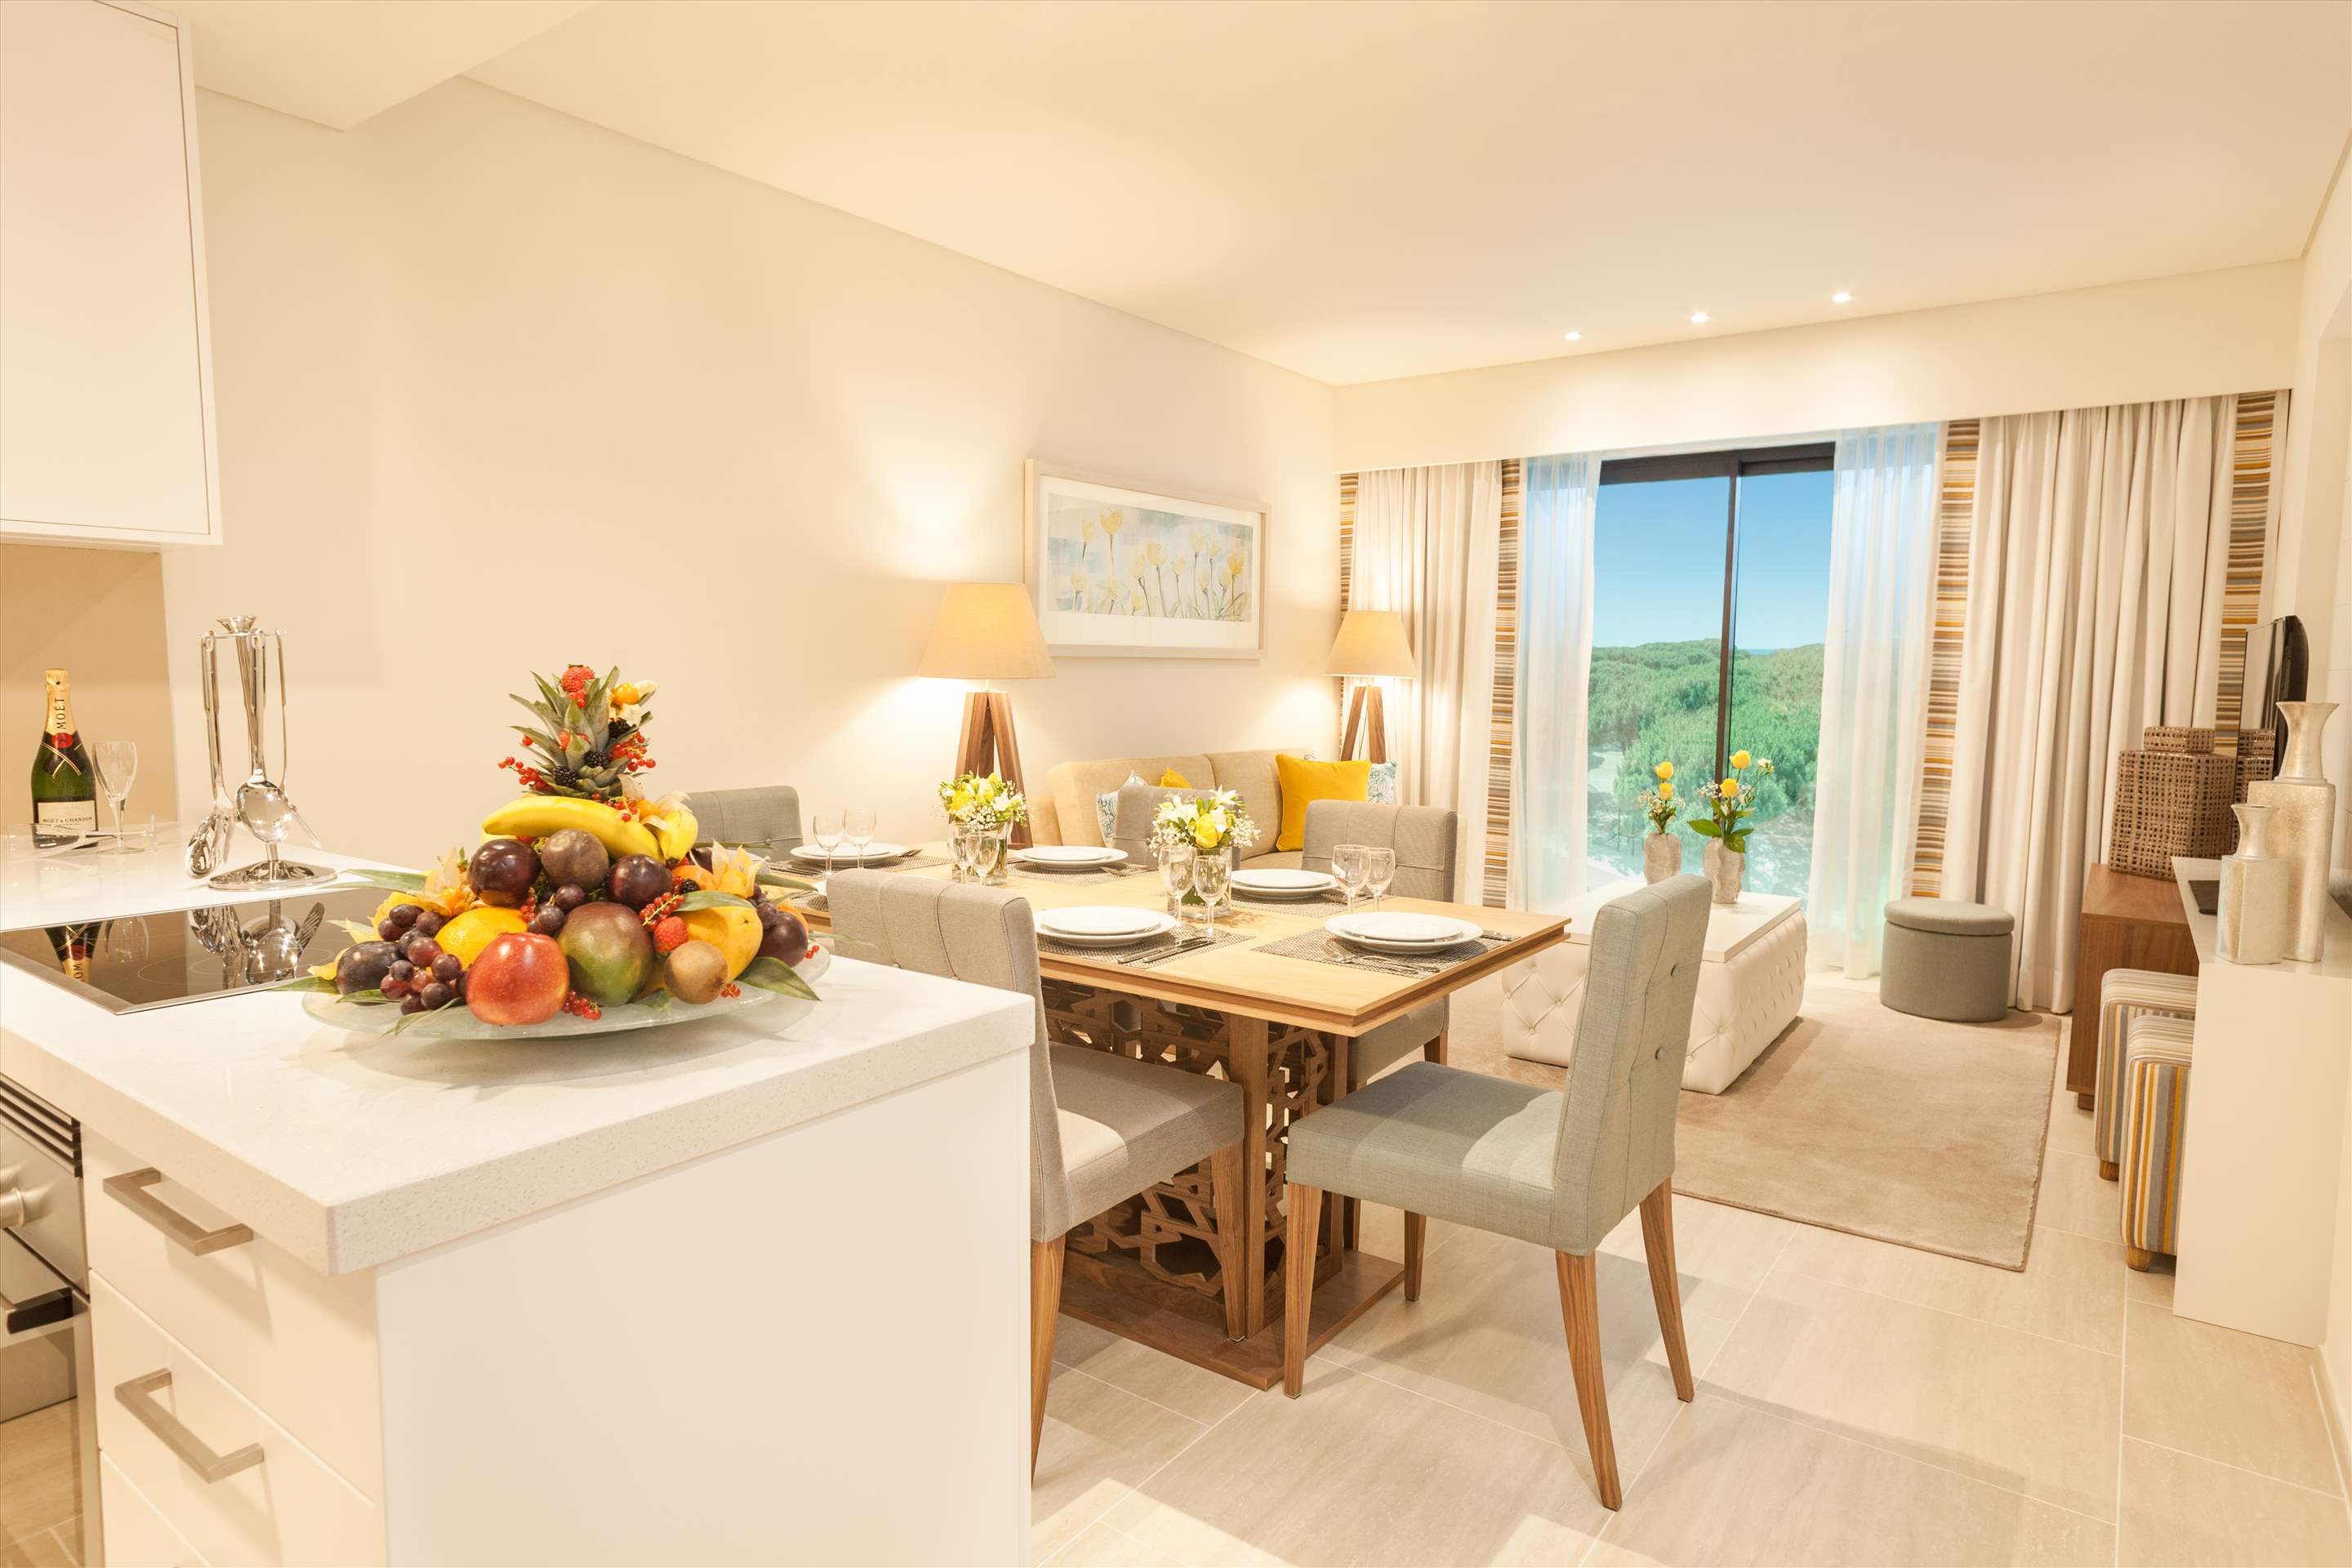 Pine Cliffs Gardens, Three Bedroom Suite, S/C Basis, 3 bedroom apartment in Pine Cliffs Resort, Algarve Photo #2